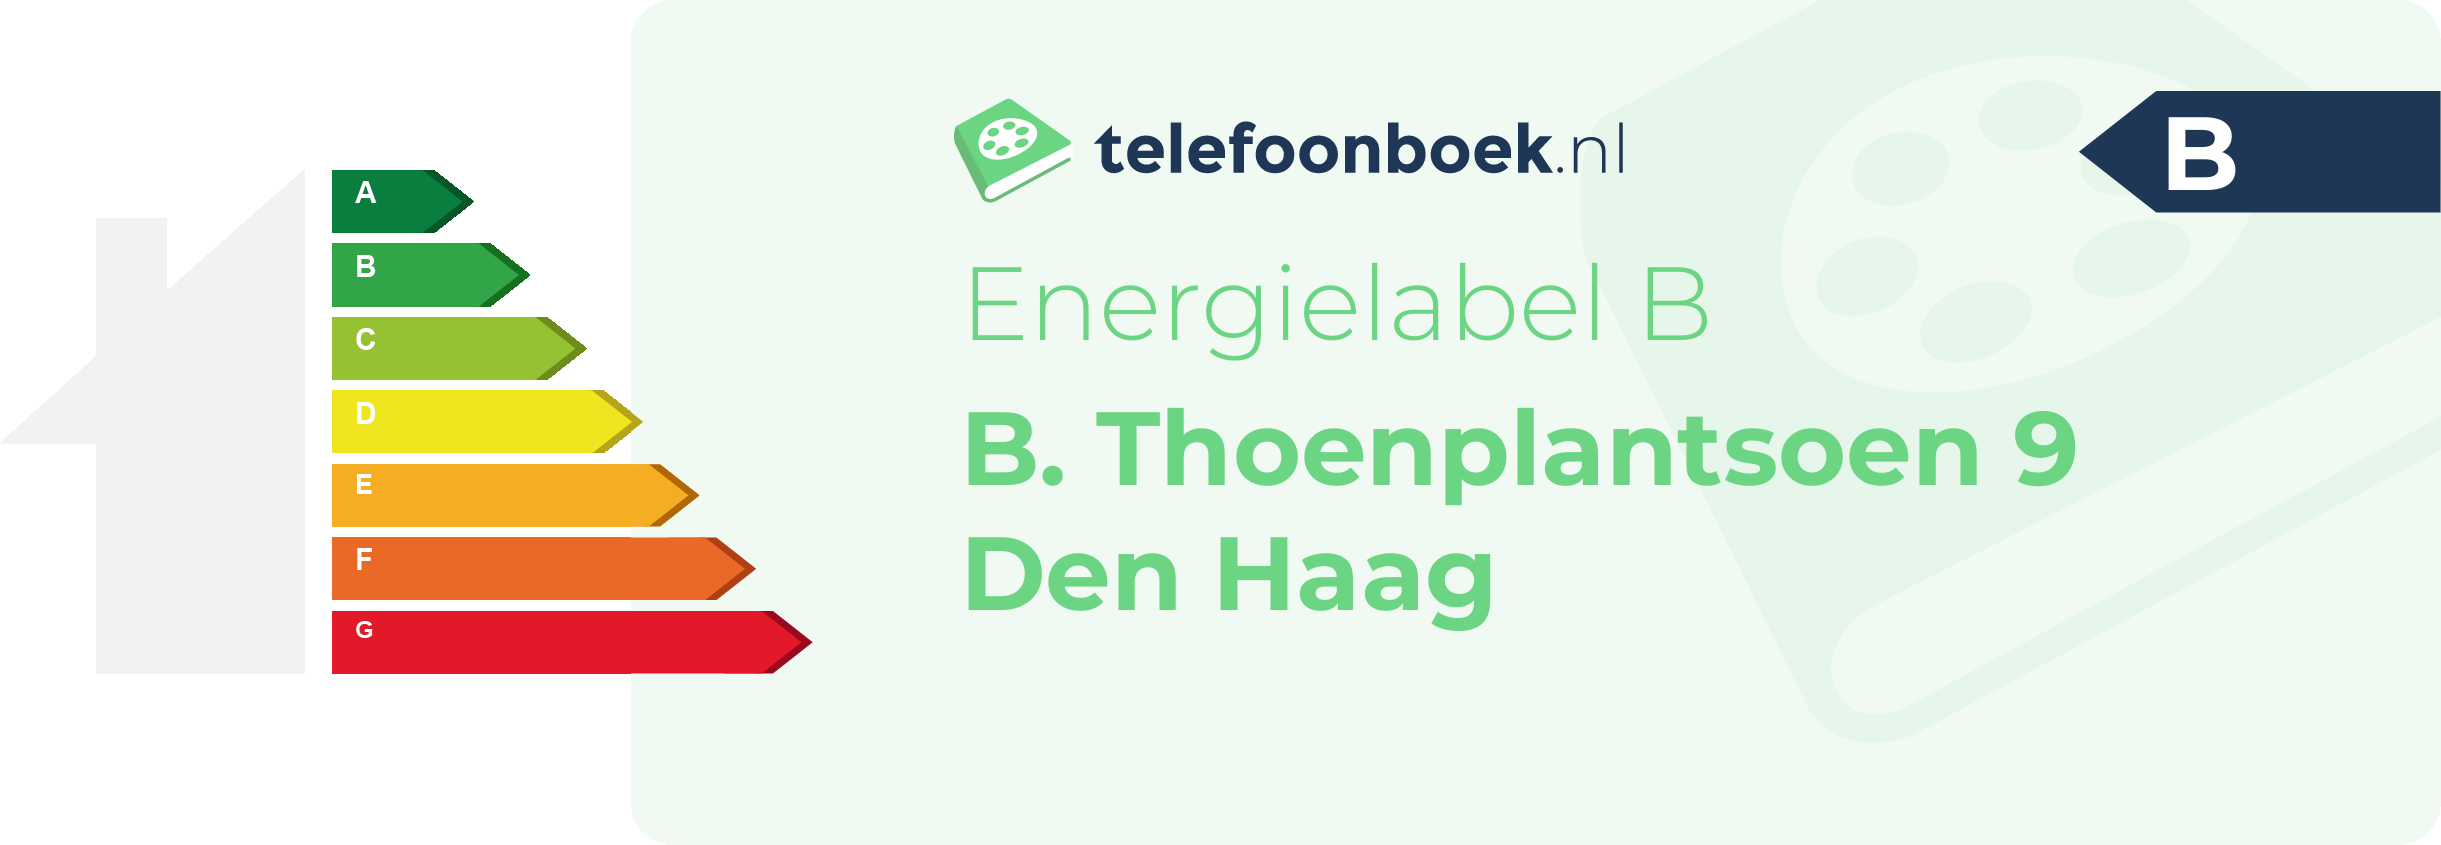 Energielabel B. Thoenplantsoen 9 Den Haag